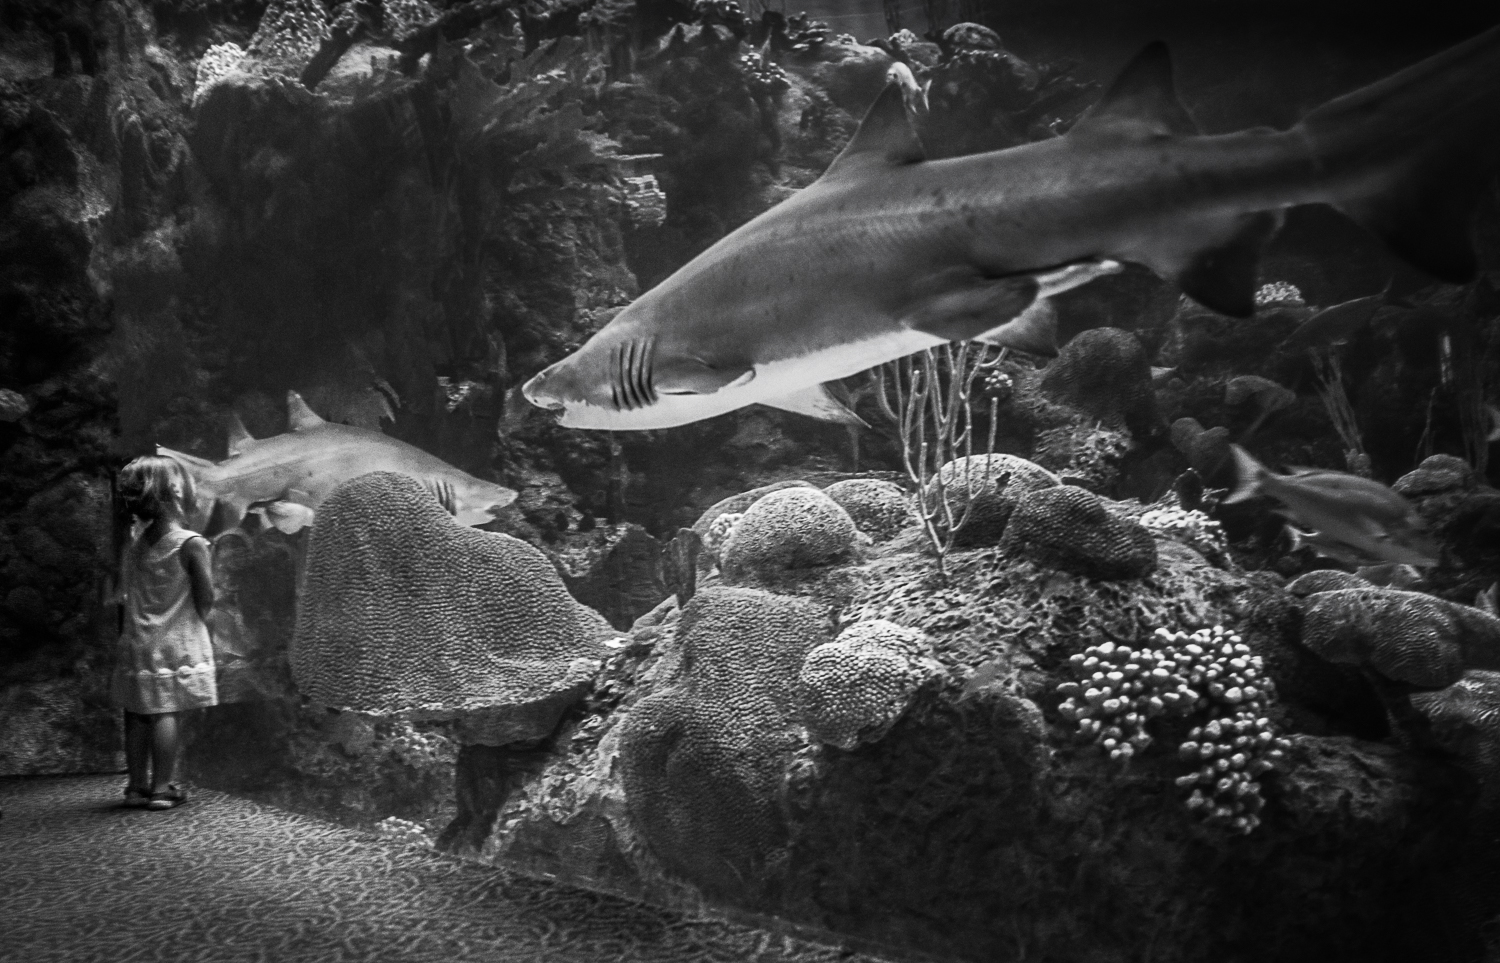  Girl at the aquarium Tampa Bay, Florida 2014    3:2  